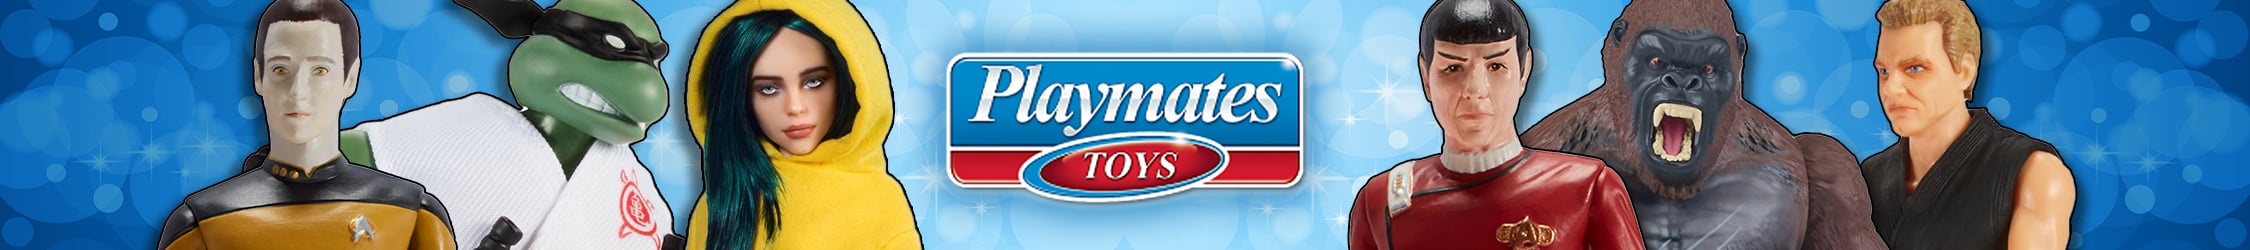 Playmates